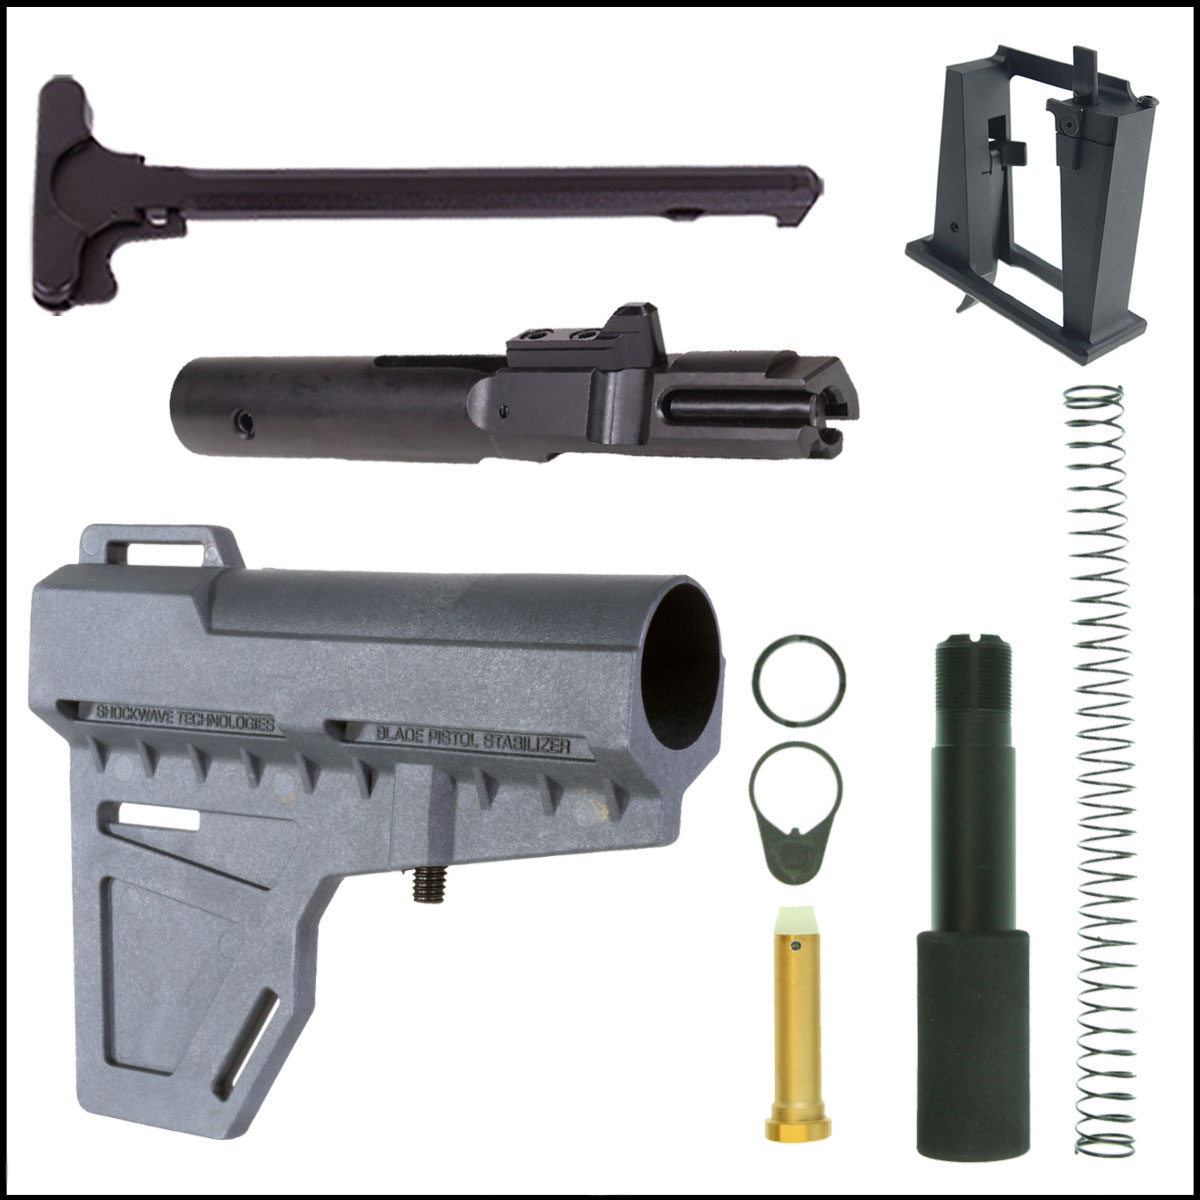 Stock + Buffer Tube Combo: KAK Industry KAK Blade - Grey  + Omega Mfg. Heavy Duty Pistol Buffer Kit+ United Defense 9mm (9x19) BCG + Recoil Technologies AR-15 Mil-Spec Charging Handle  + Sylvan Arms AR-15 9mm Magwell Adapter